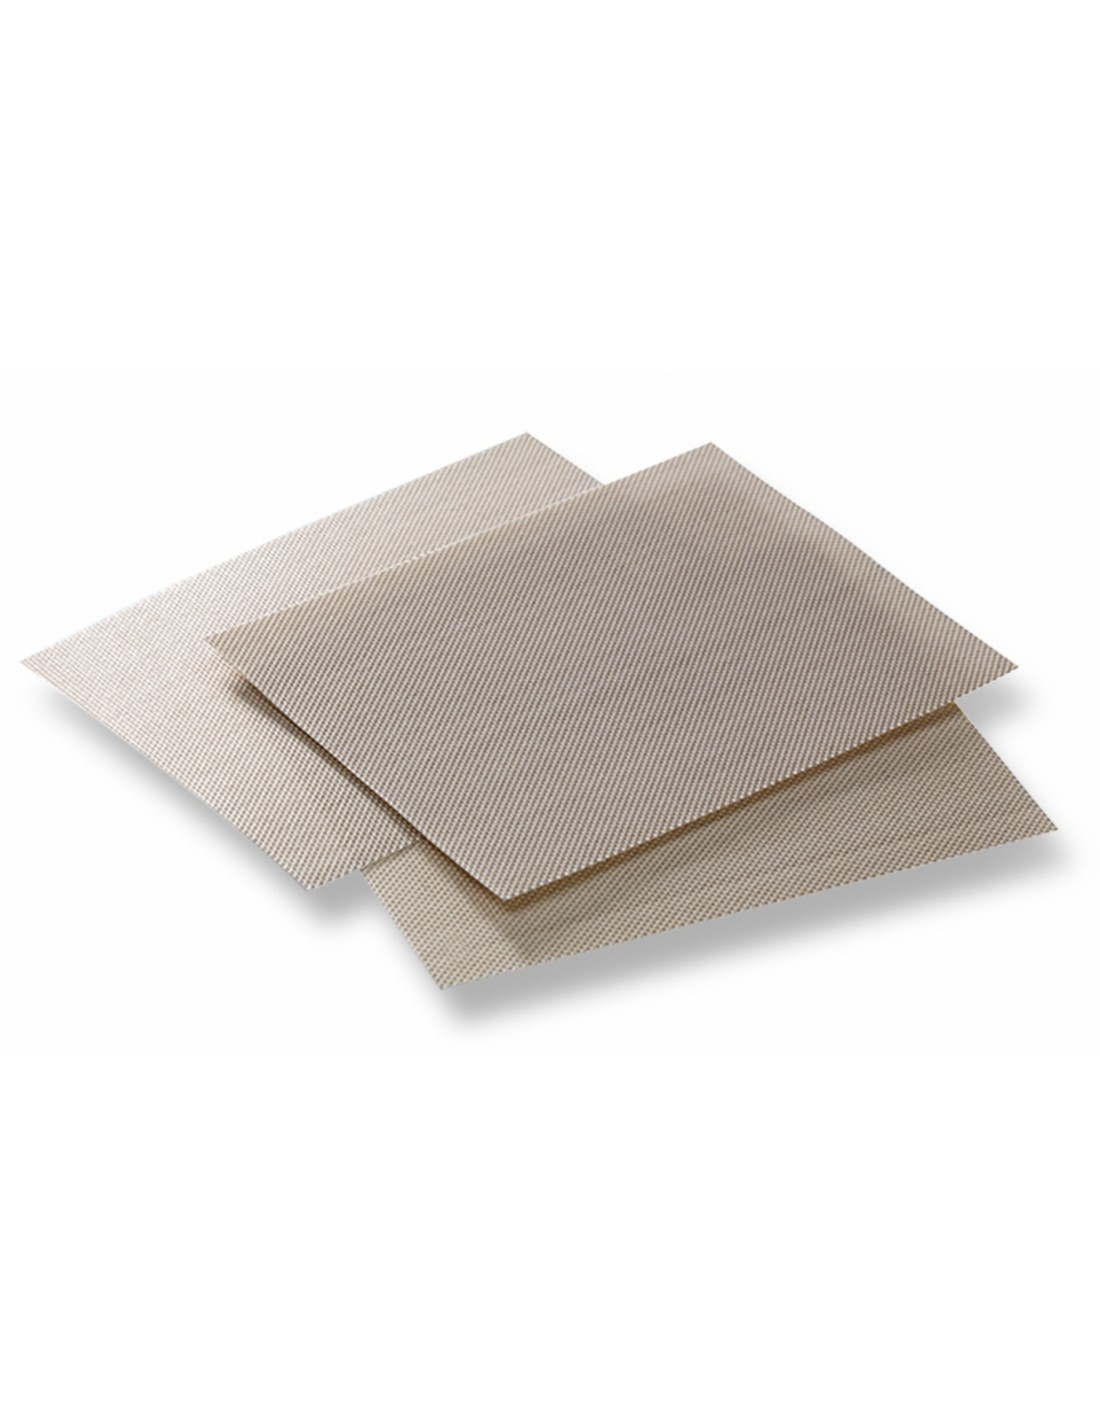 Replacement fiberglass sheets (15 pieces)